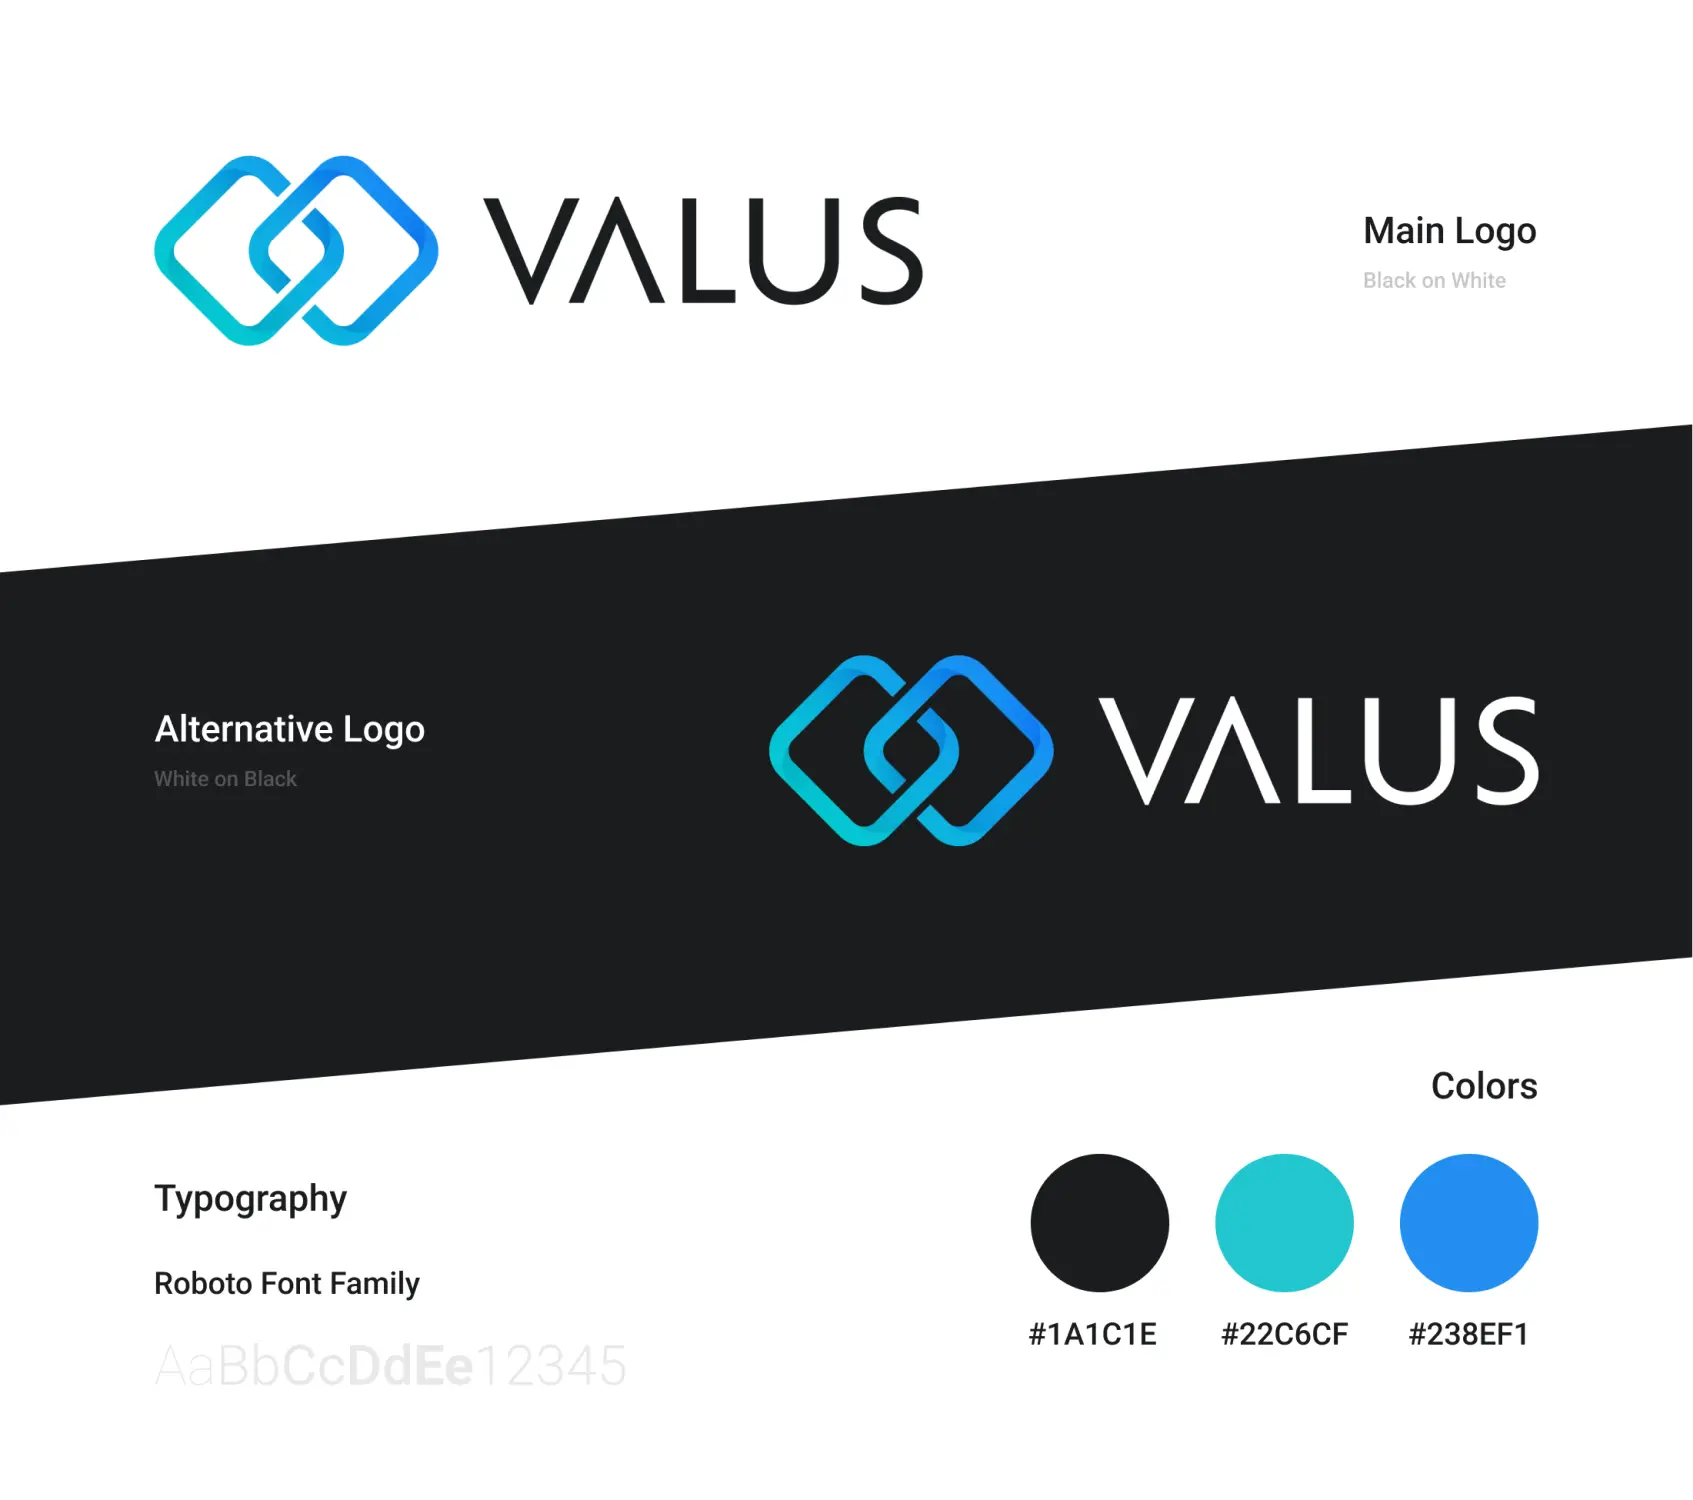 VALUS Corporate Identity